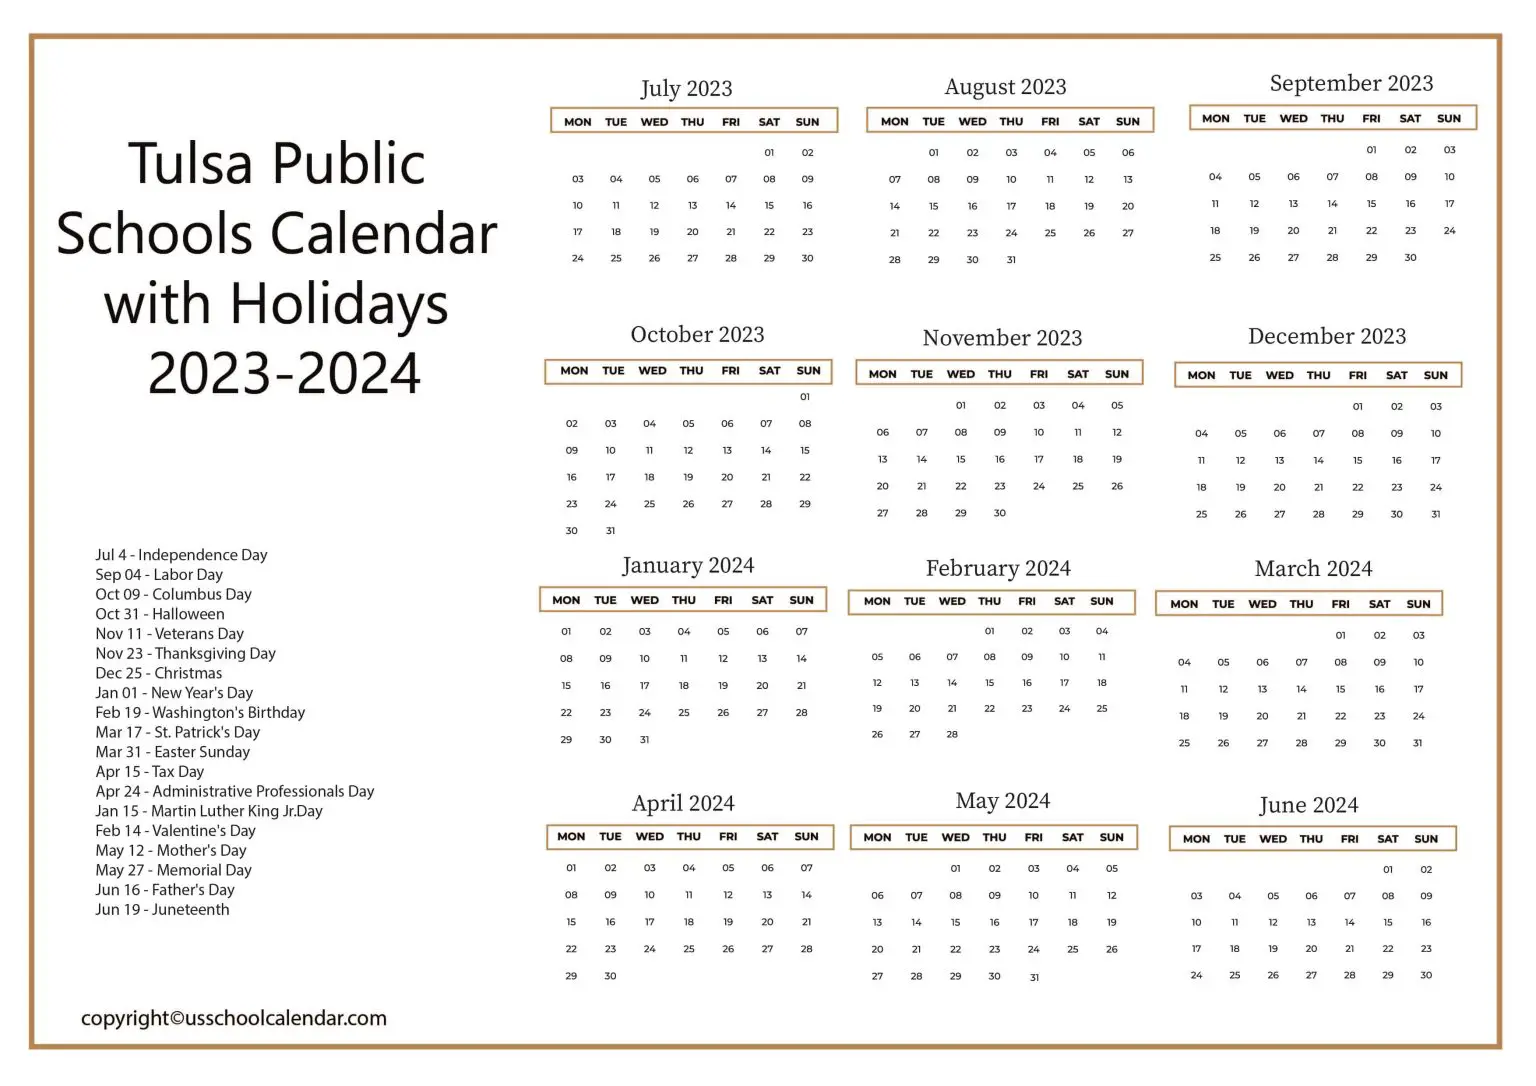 Tulsa Public Schools Calendar with Holidays 2023 2024